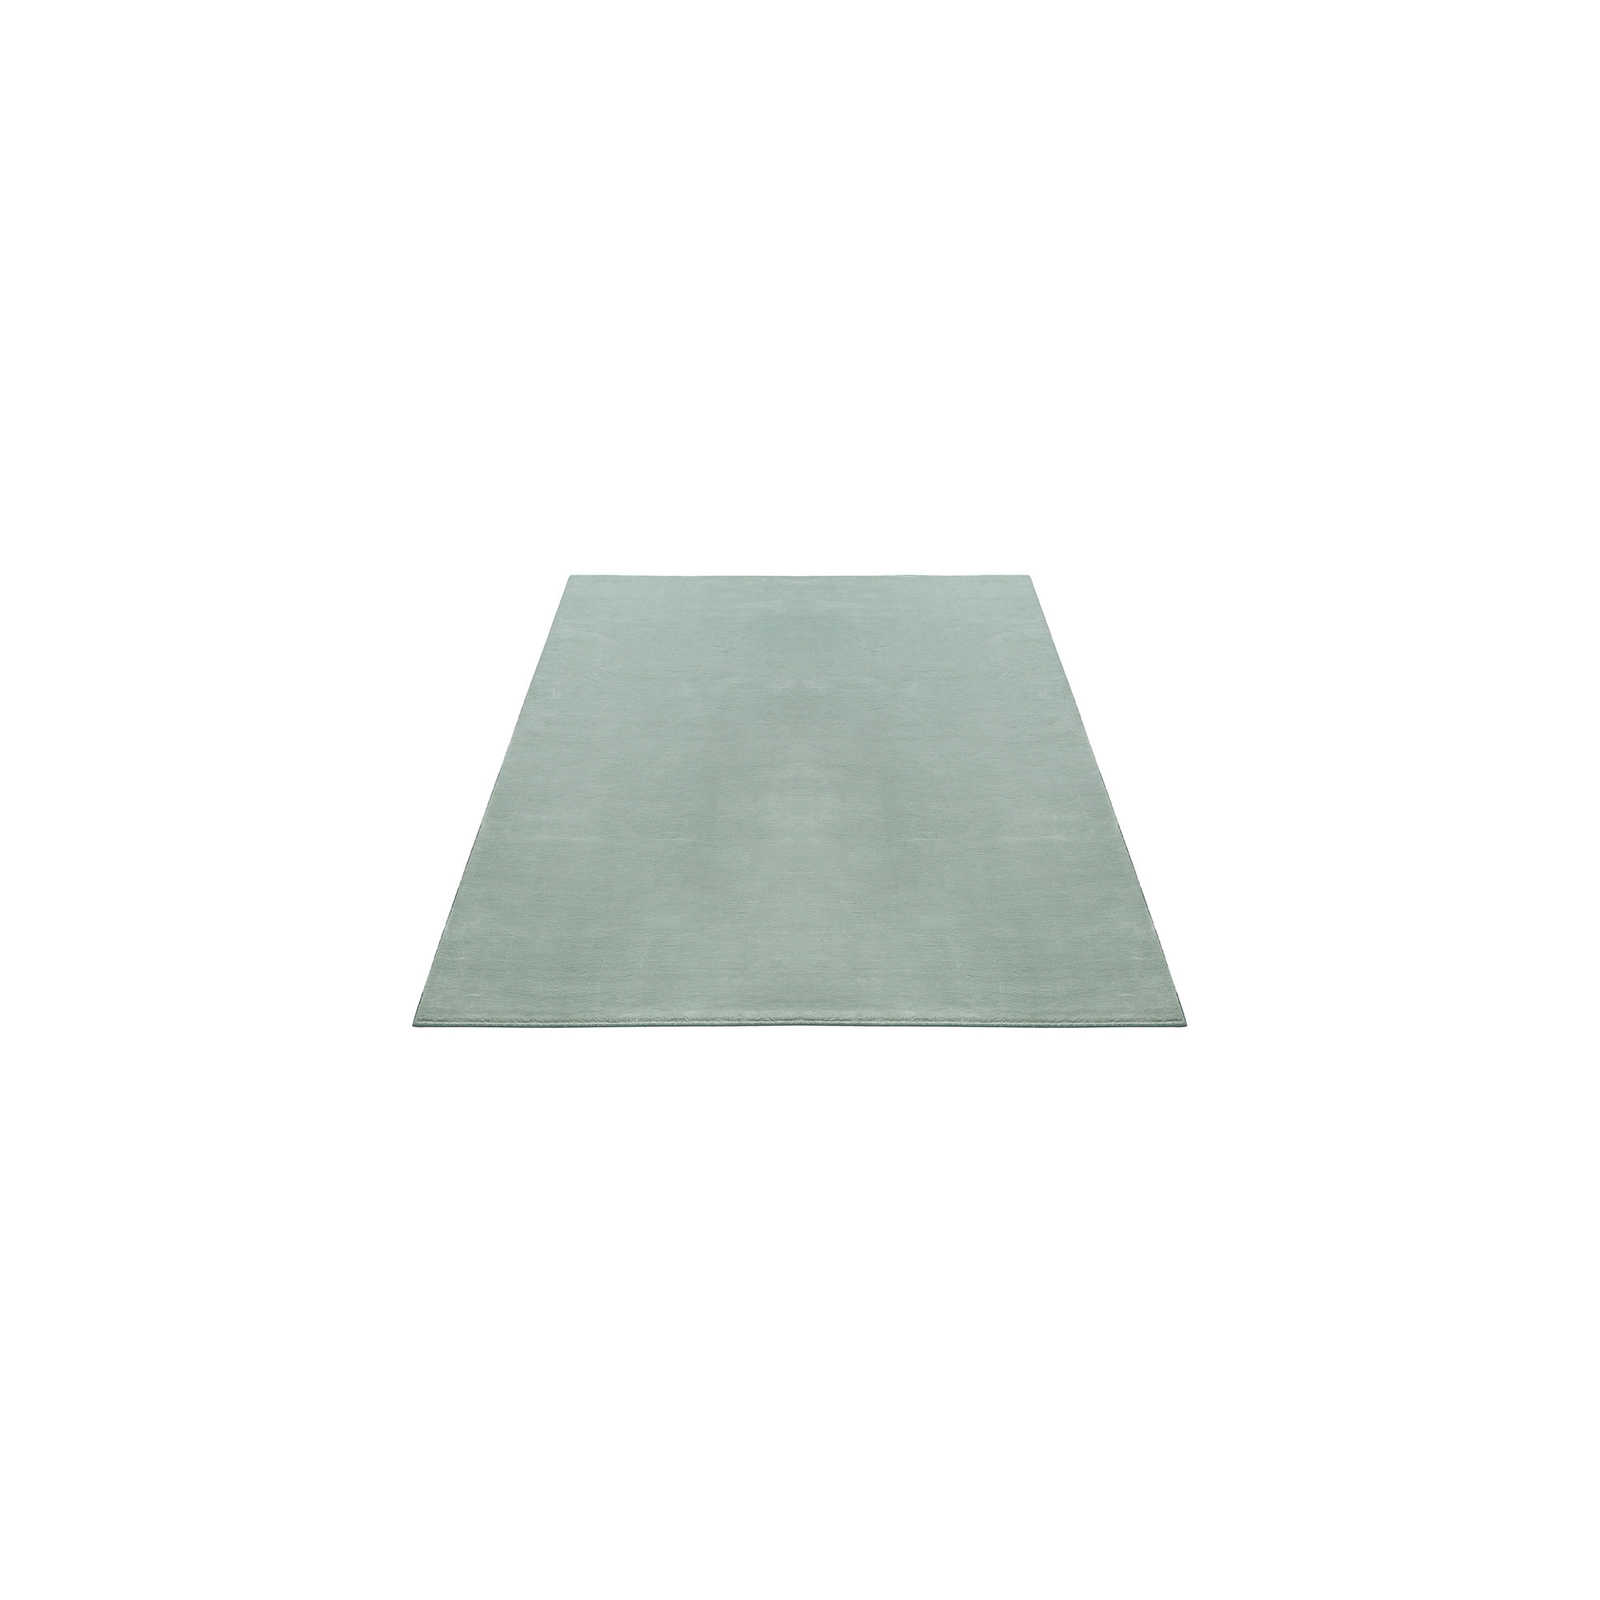 Soft high pile carpet in soft green - 150 x 80 cm
